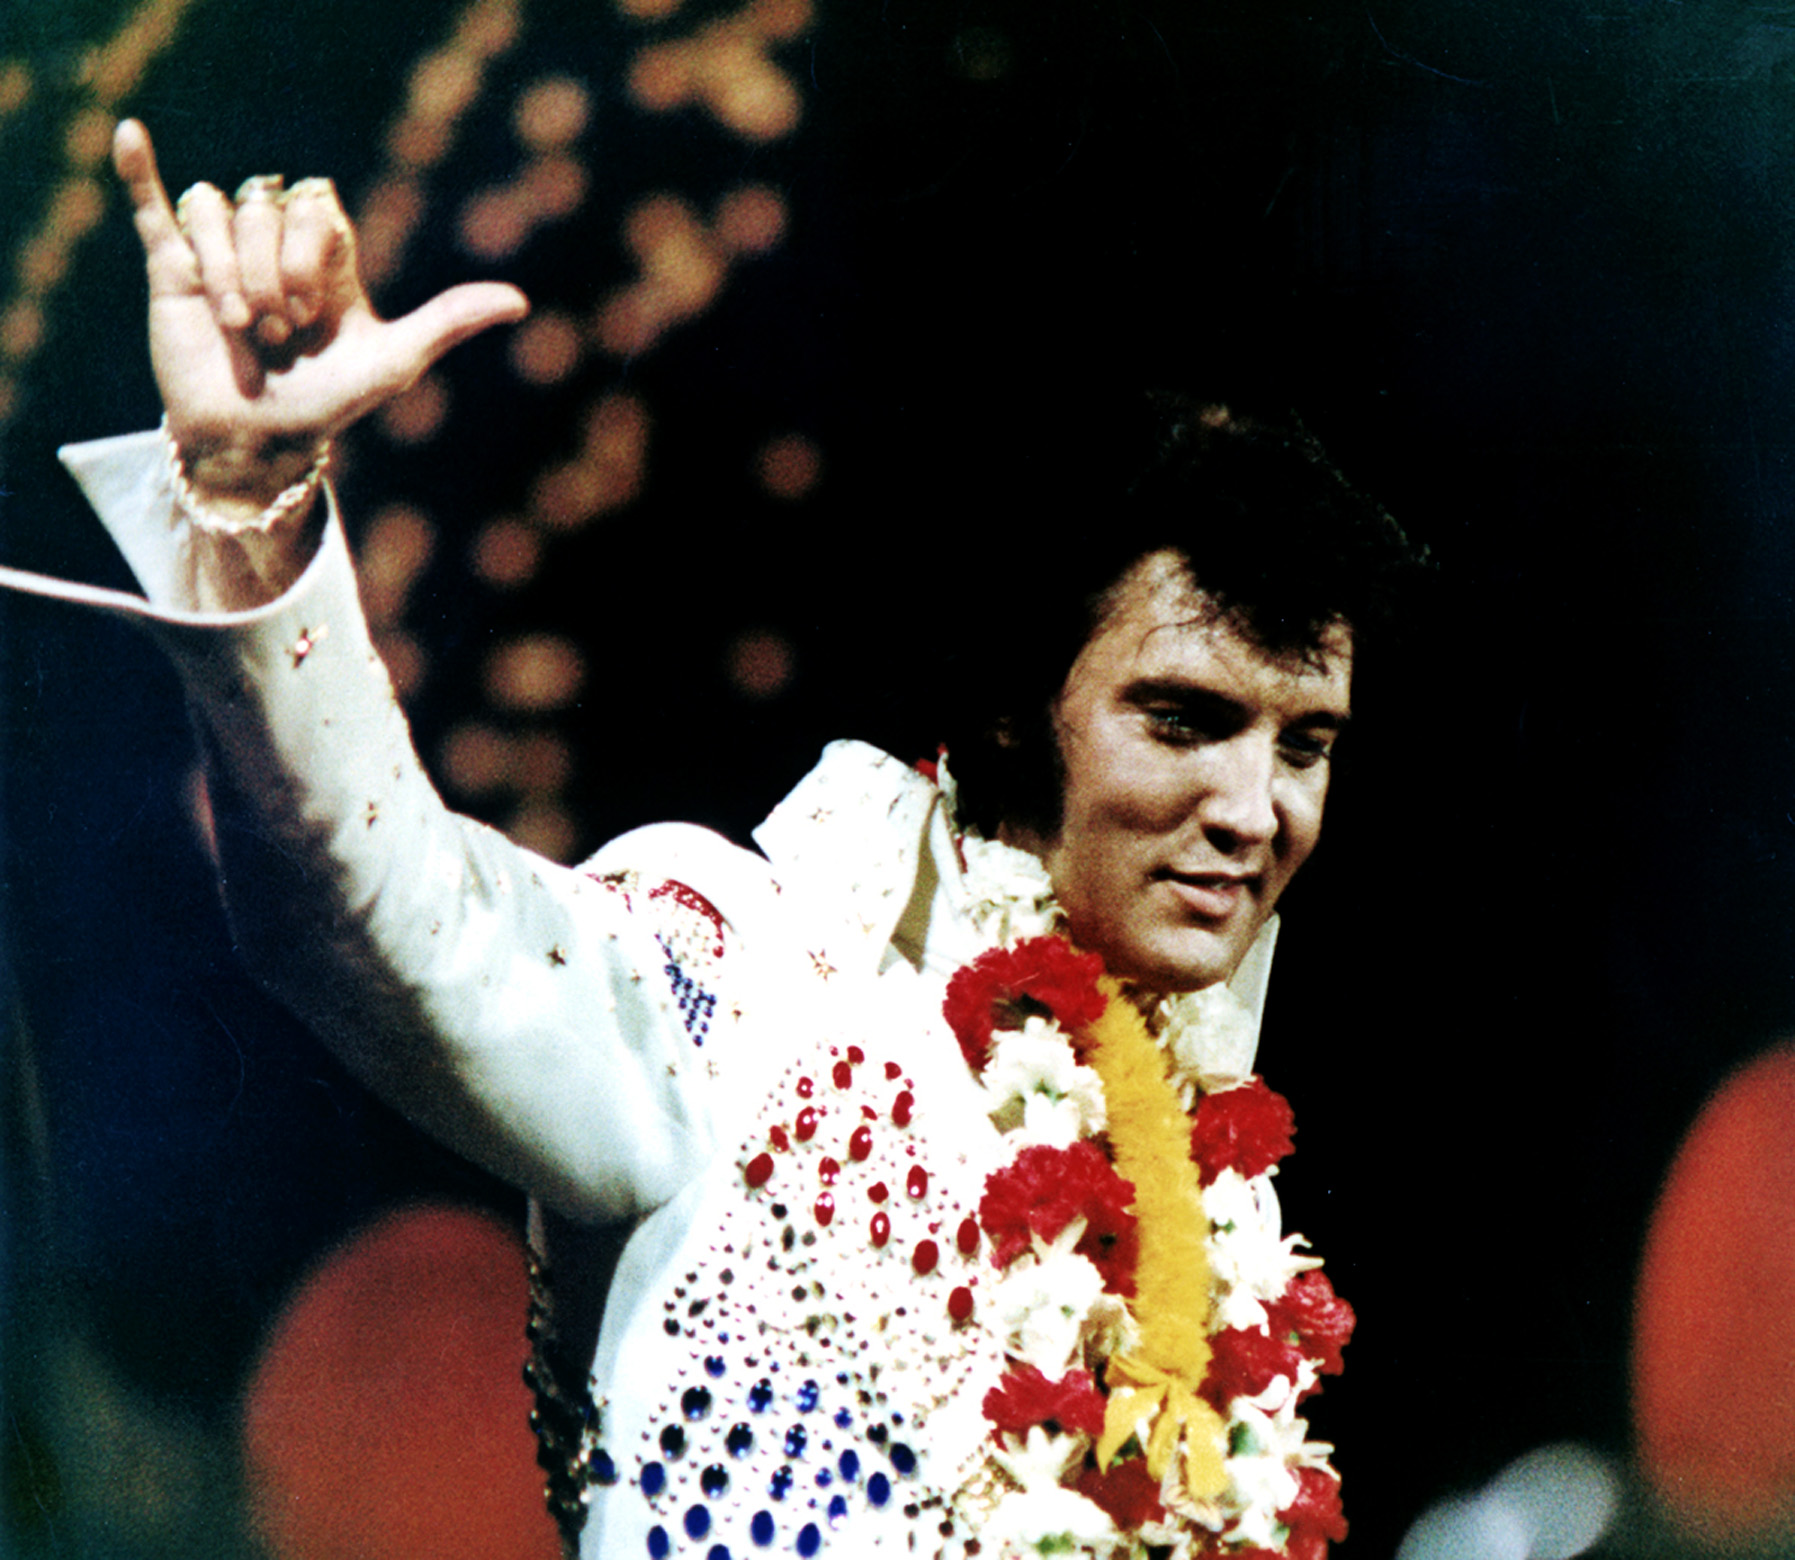 Elvis: Aloha from Hawaii